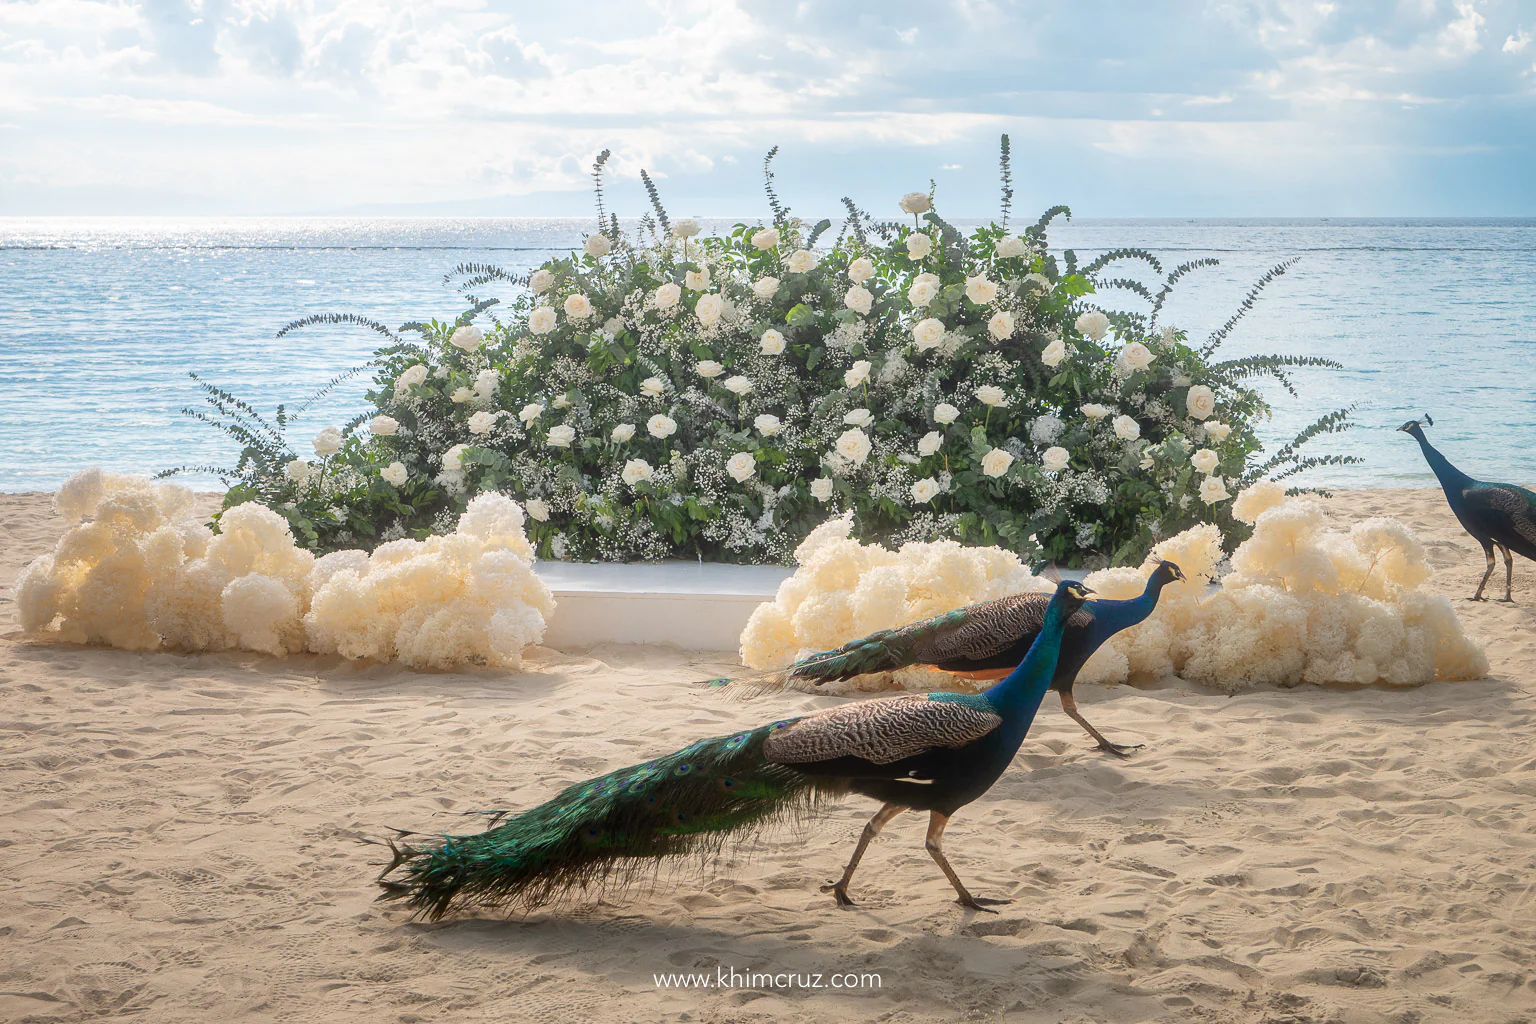 wedding photowall with peacock roaming Malipano island wedding cocktail area